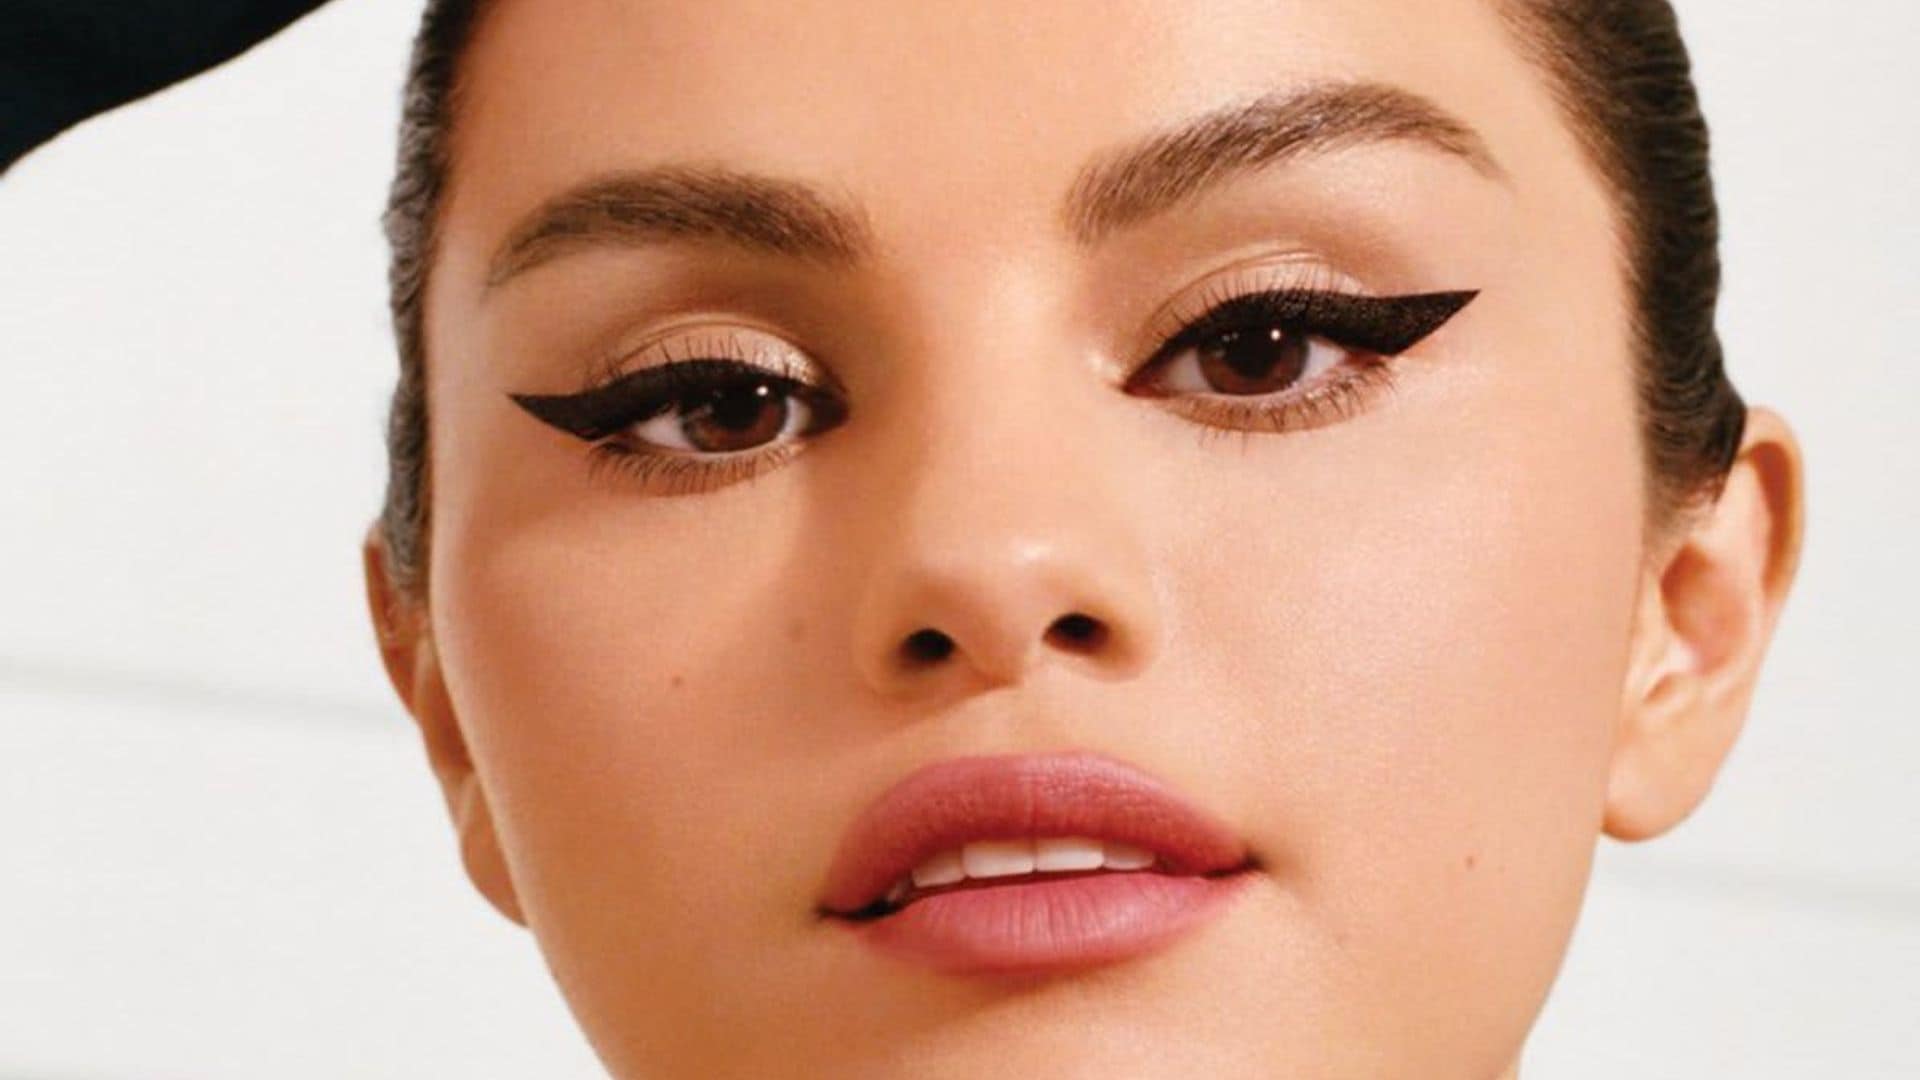 Selena Gomez puts mental health stigma aside to share struggles